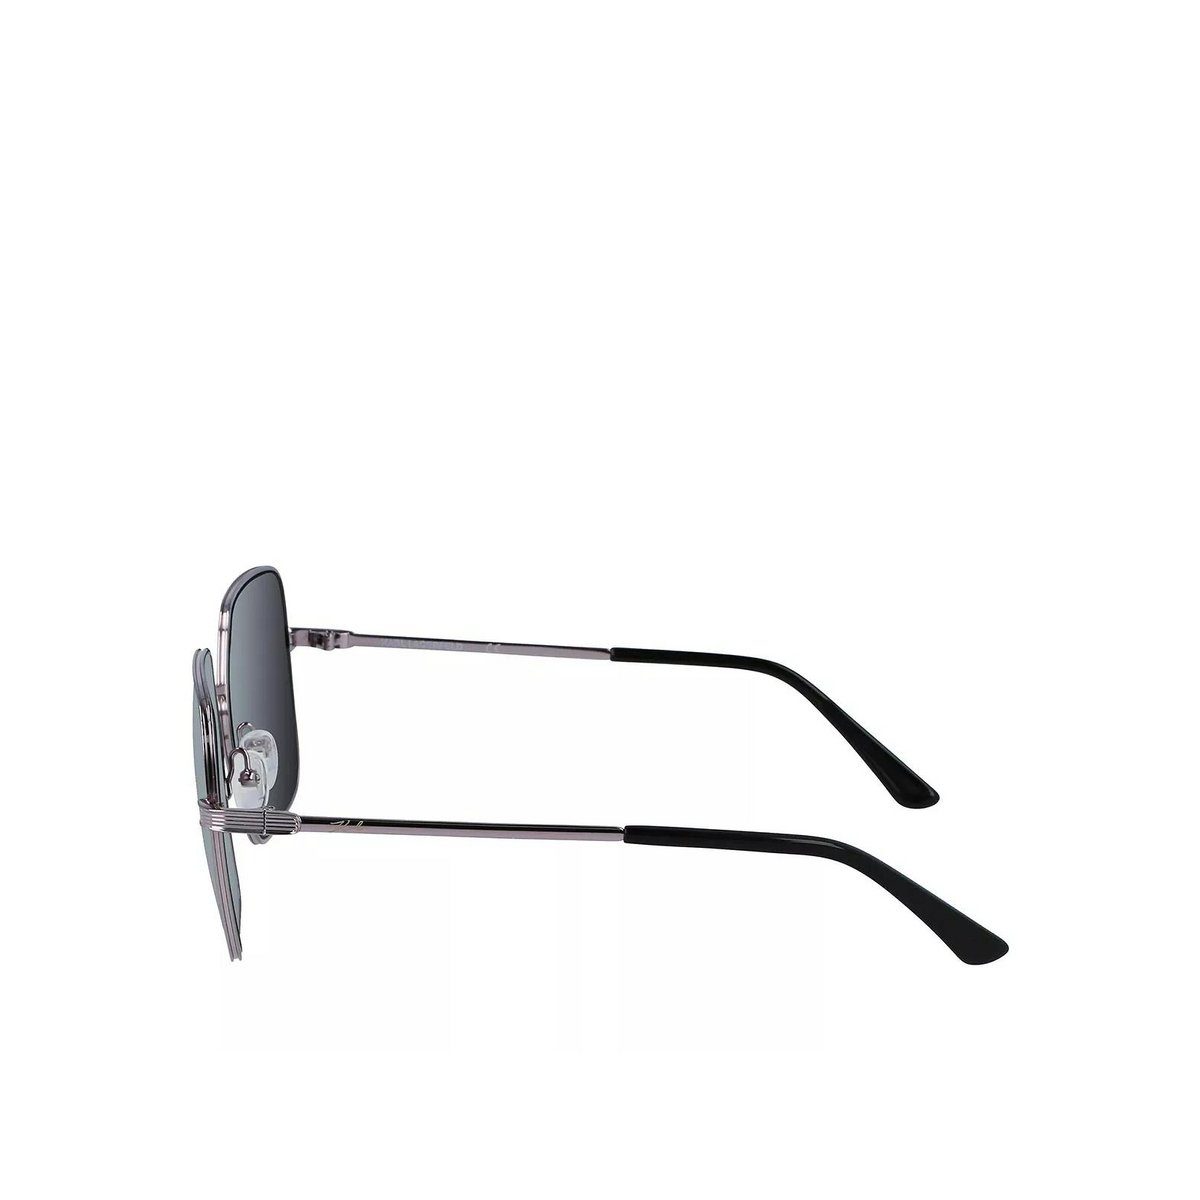 (1-St) LAGERFELD grau Sonnenbrille